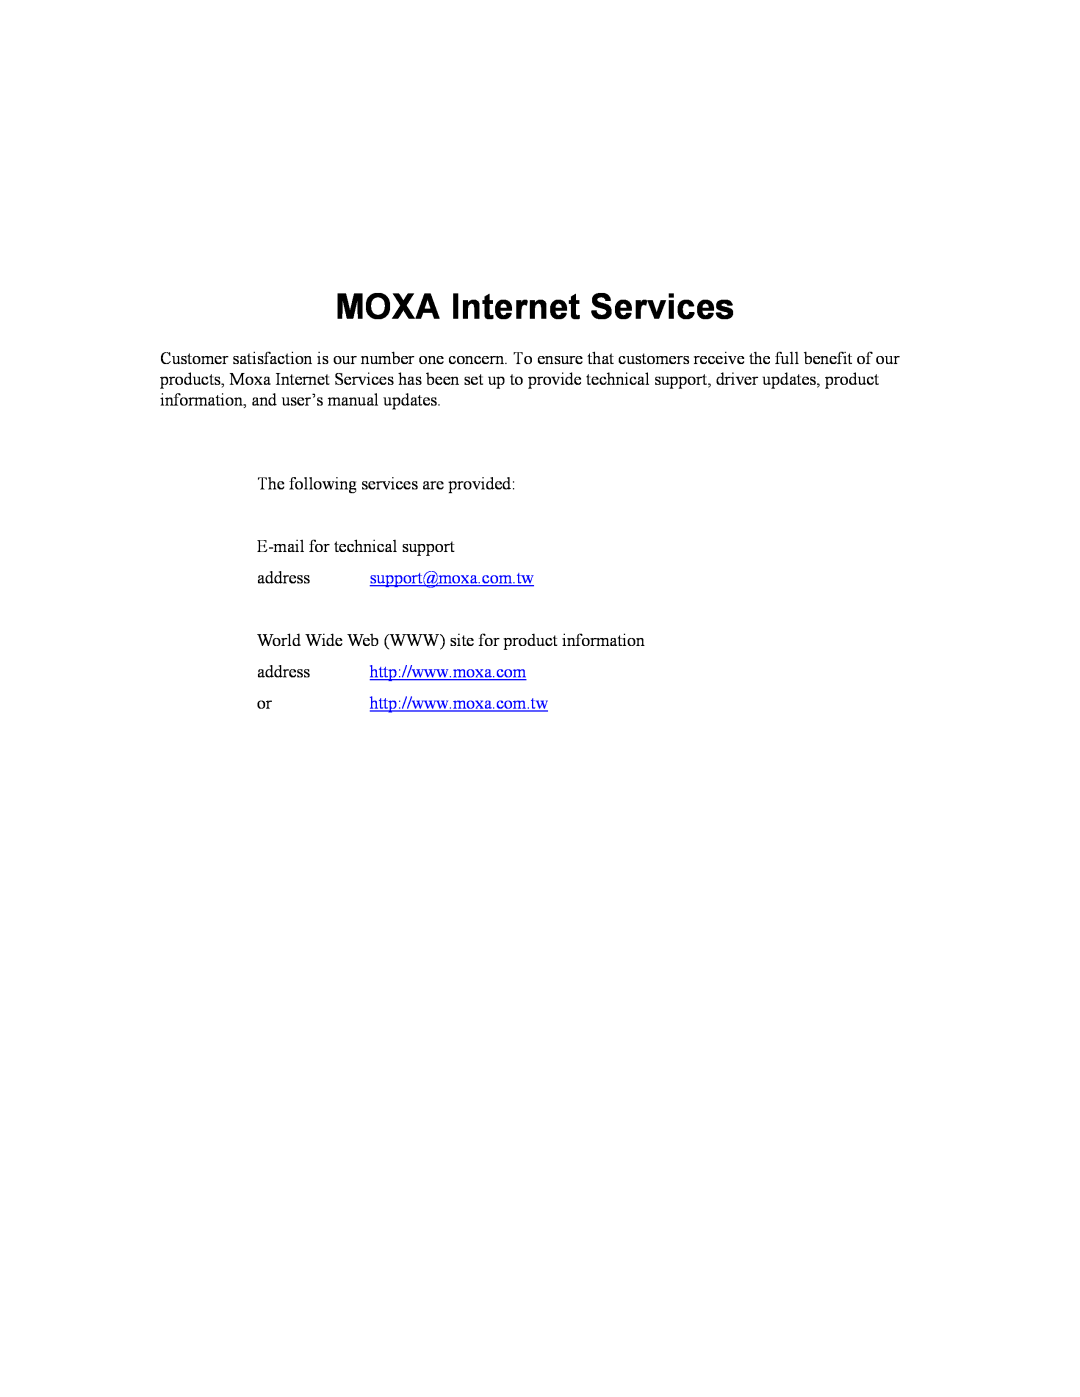 Moxa Technologies CP-104UL user manual MOXA Internet Services, address support@moxa.com.tw 